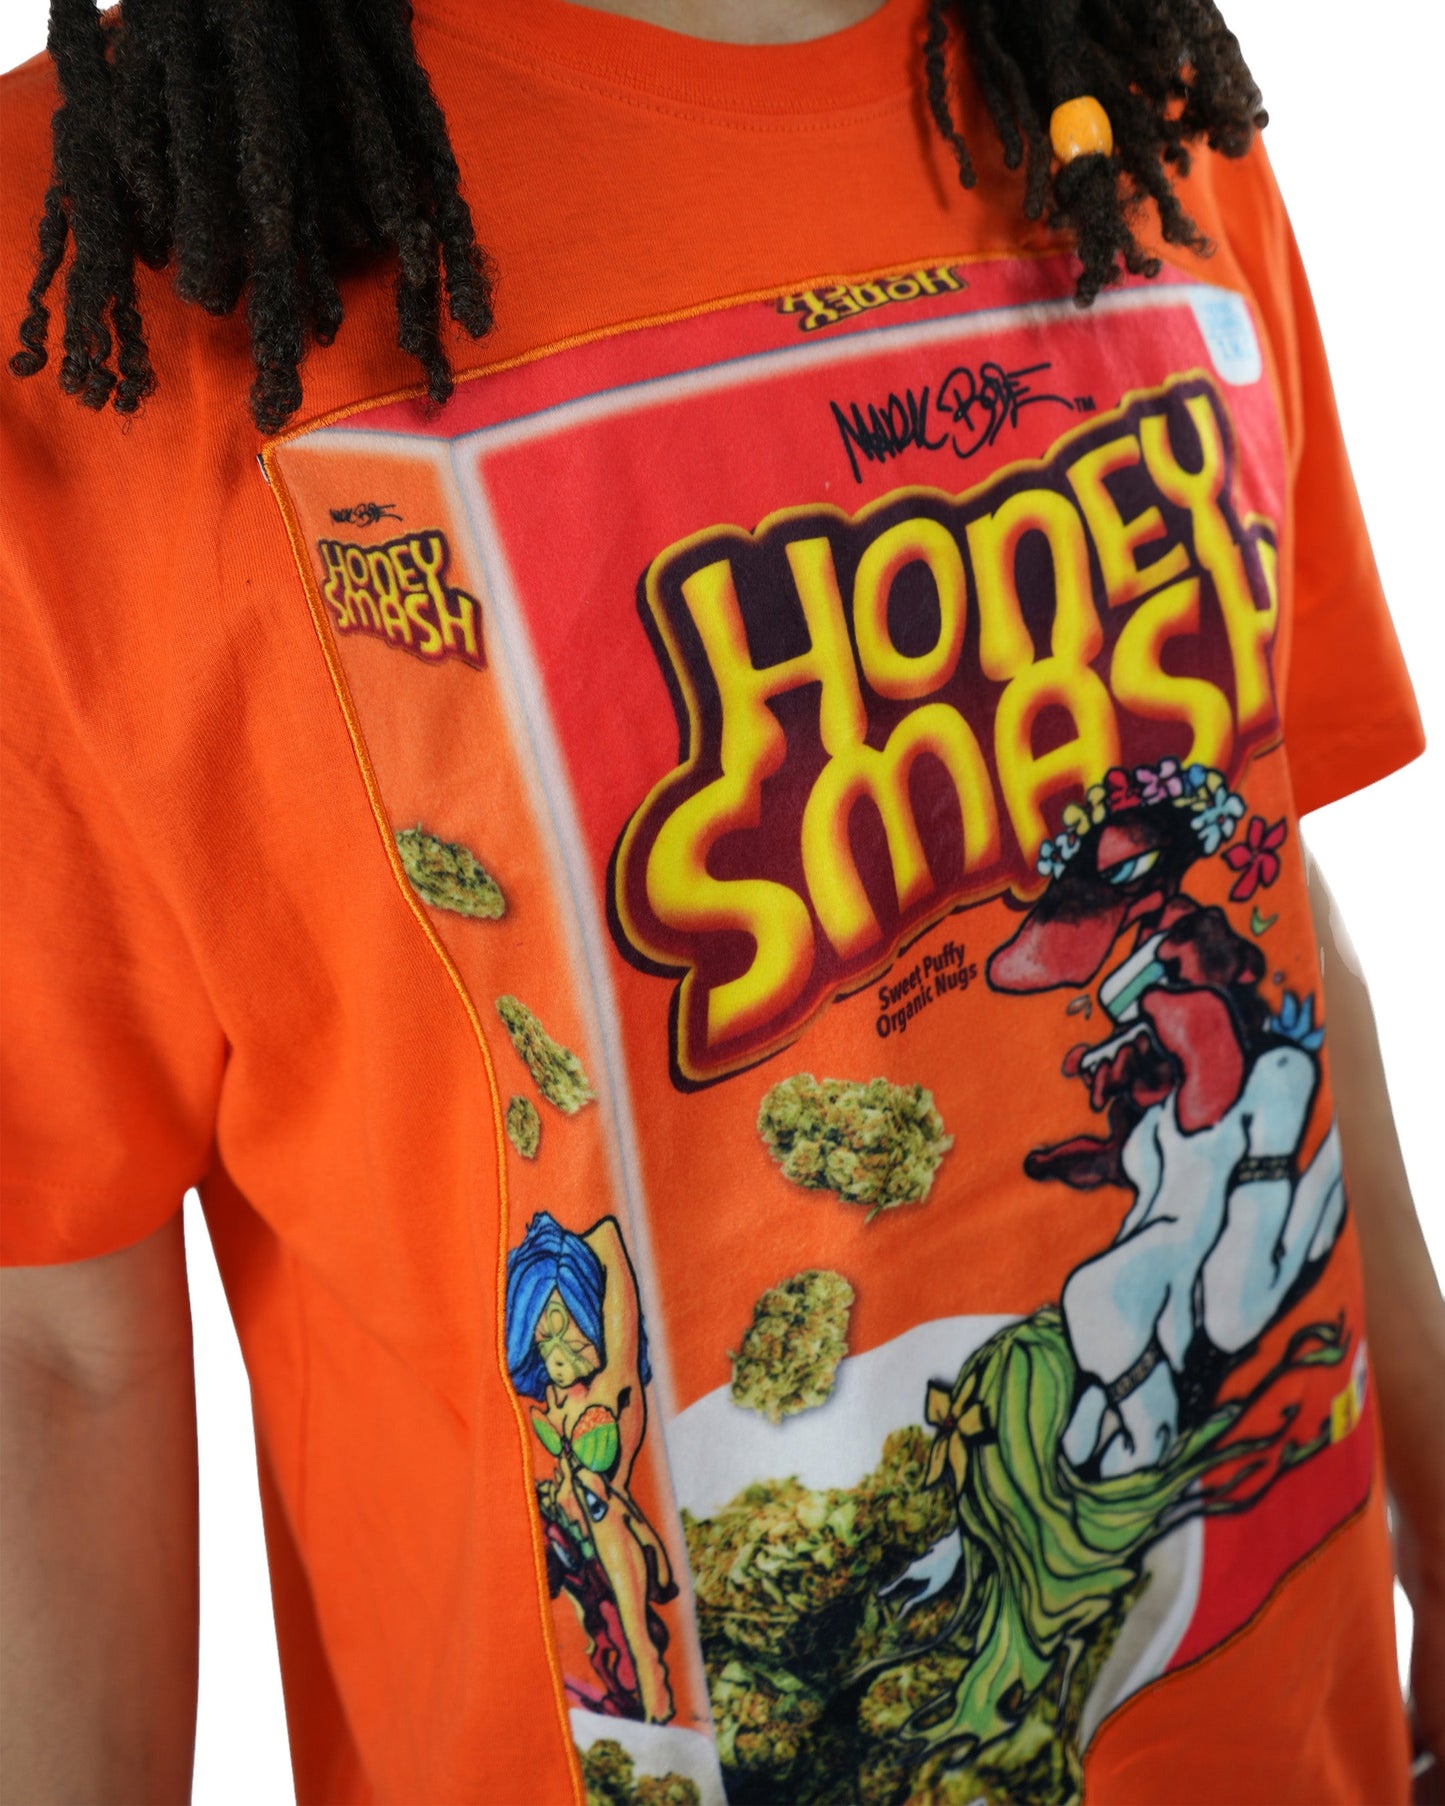 Mark Bodē Honey Smash Orange T-Shirt